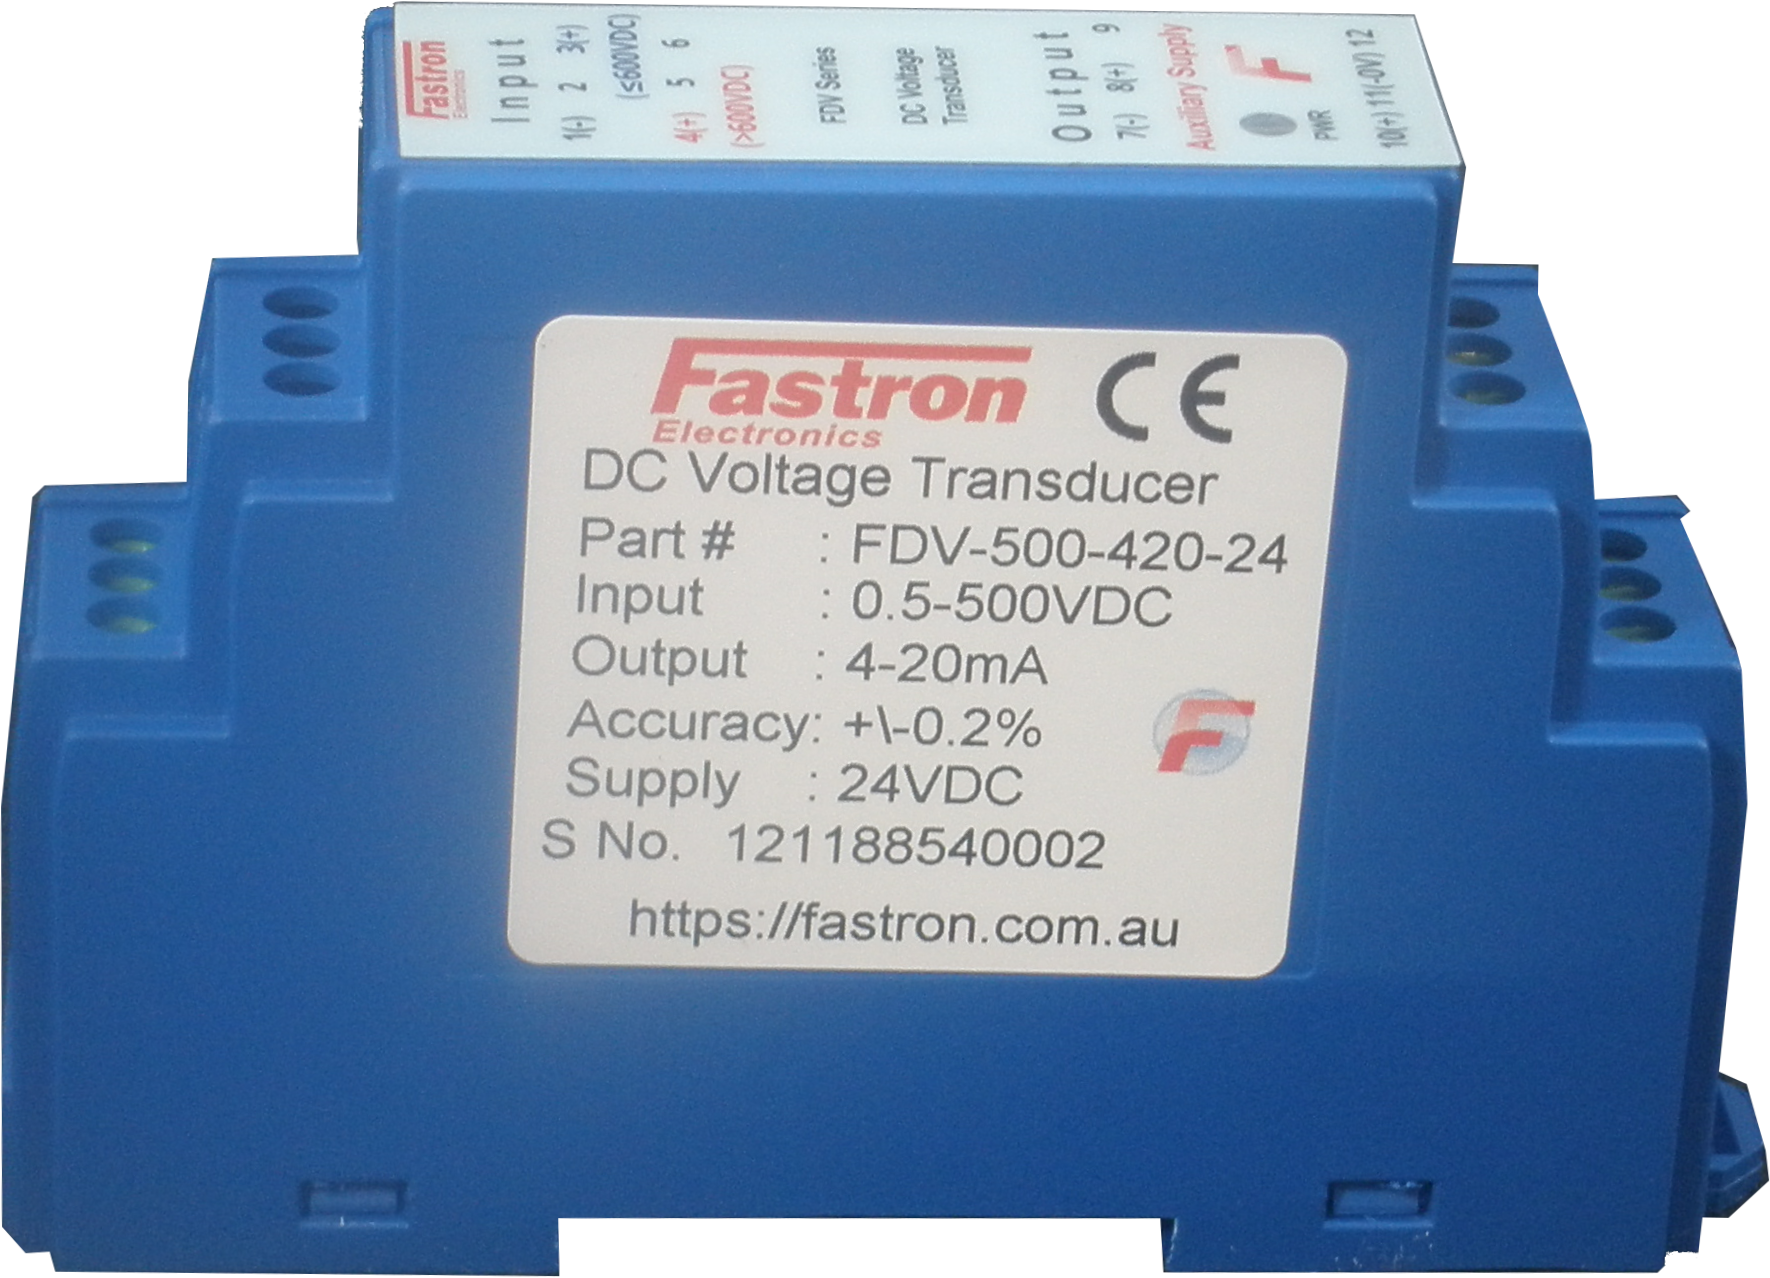 FDV-300-V10-24, DC Voltage Transducer, Din Rail Mount, 0-300VDC, 4-20mA output, 24VDC Supply Voltage, 150mS Response